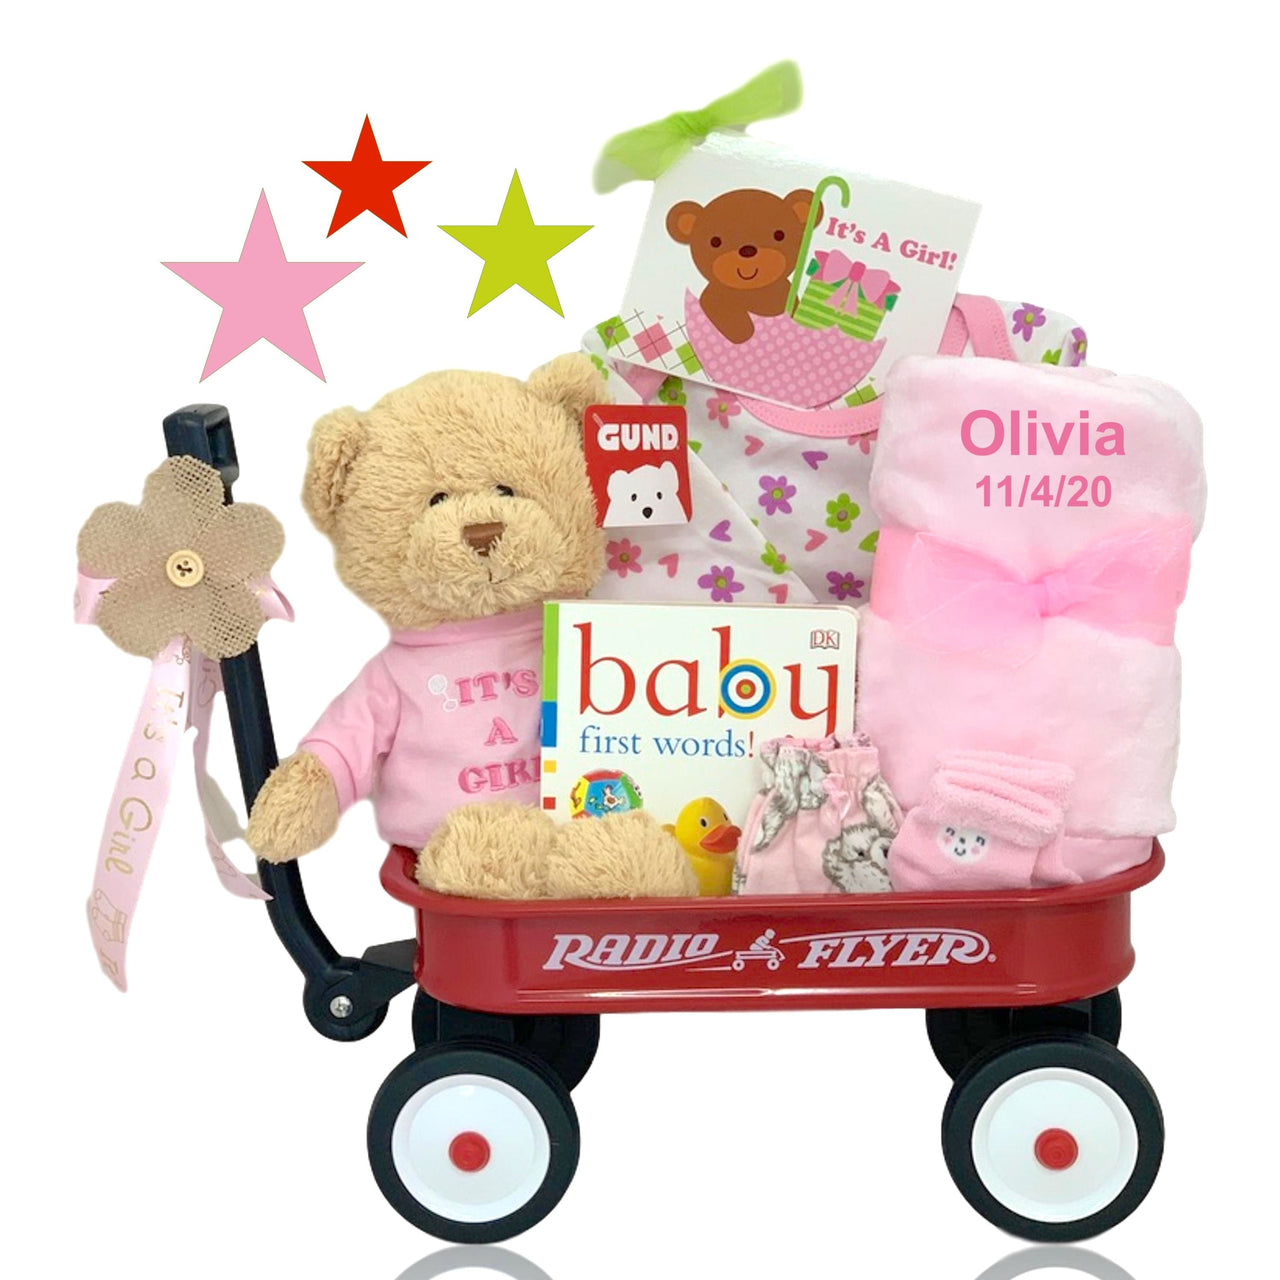 Personalized It's A Girl Mini Radio Flyer Wagon Gift Basket